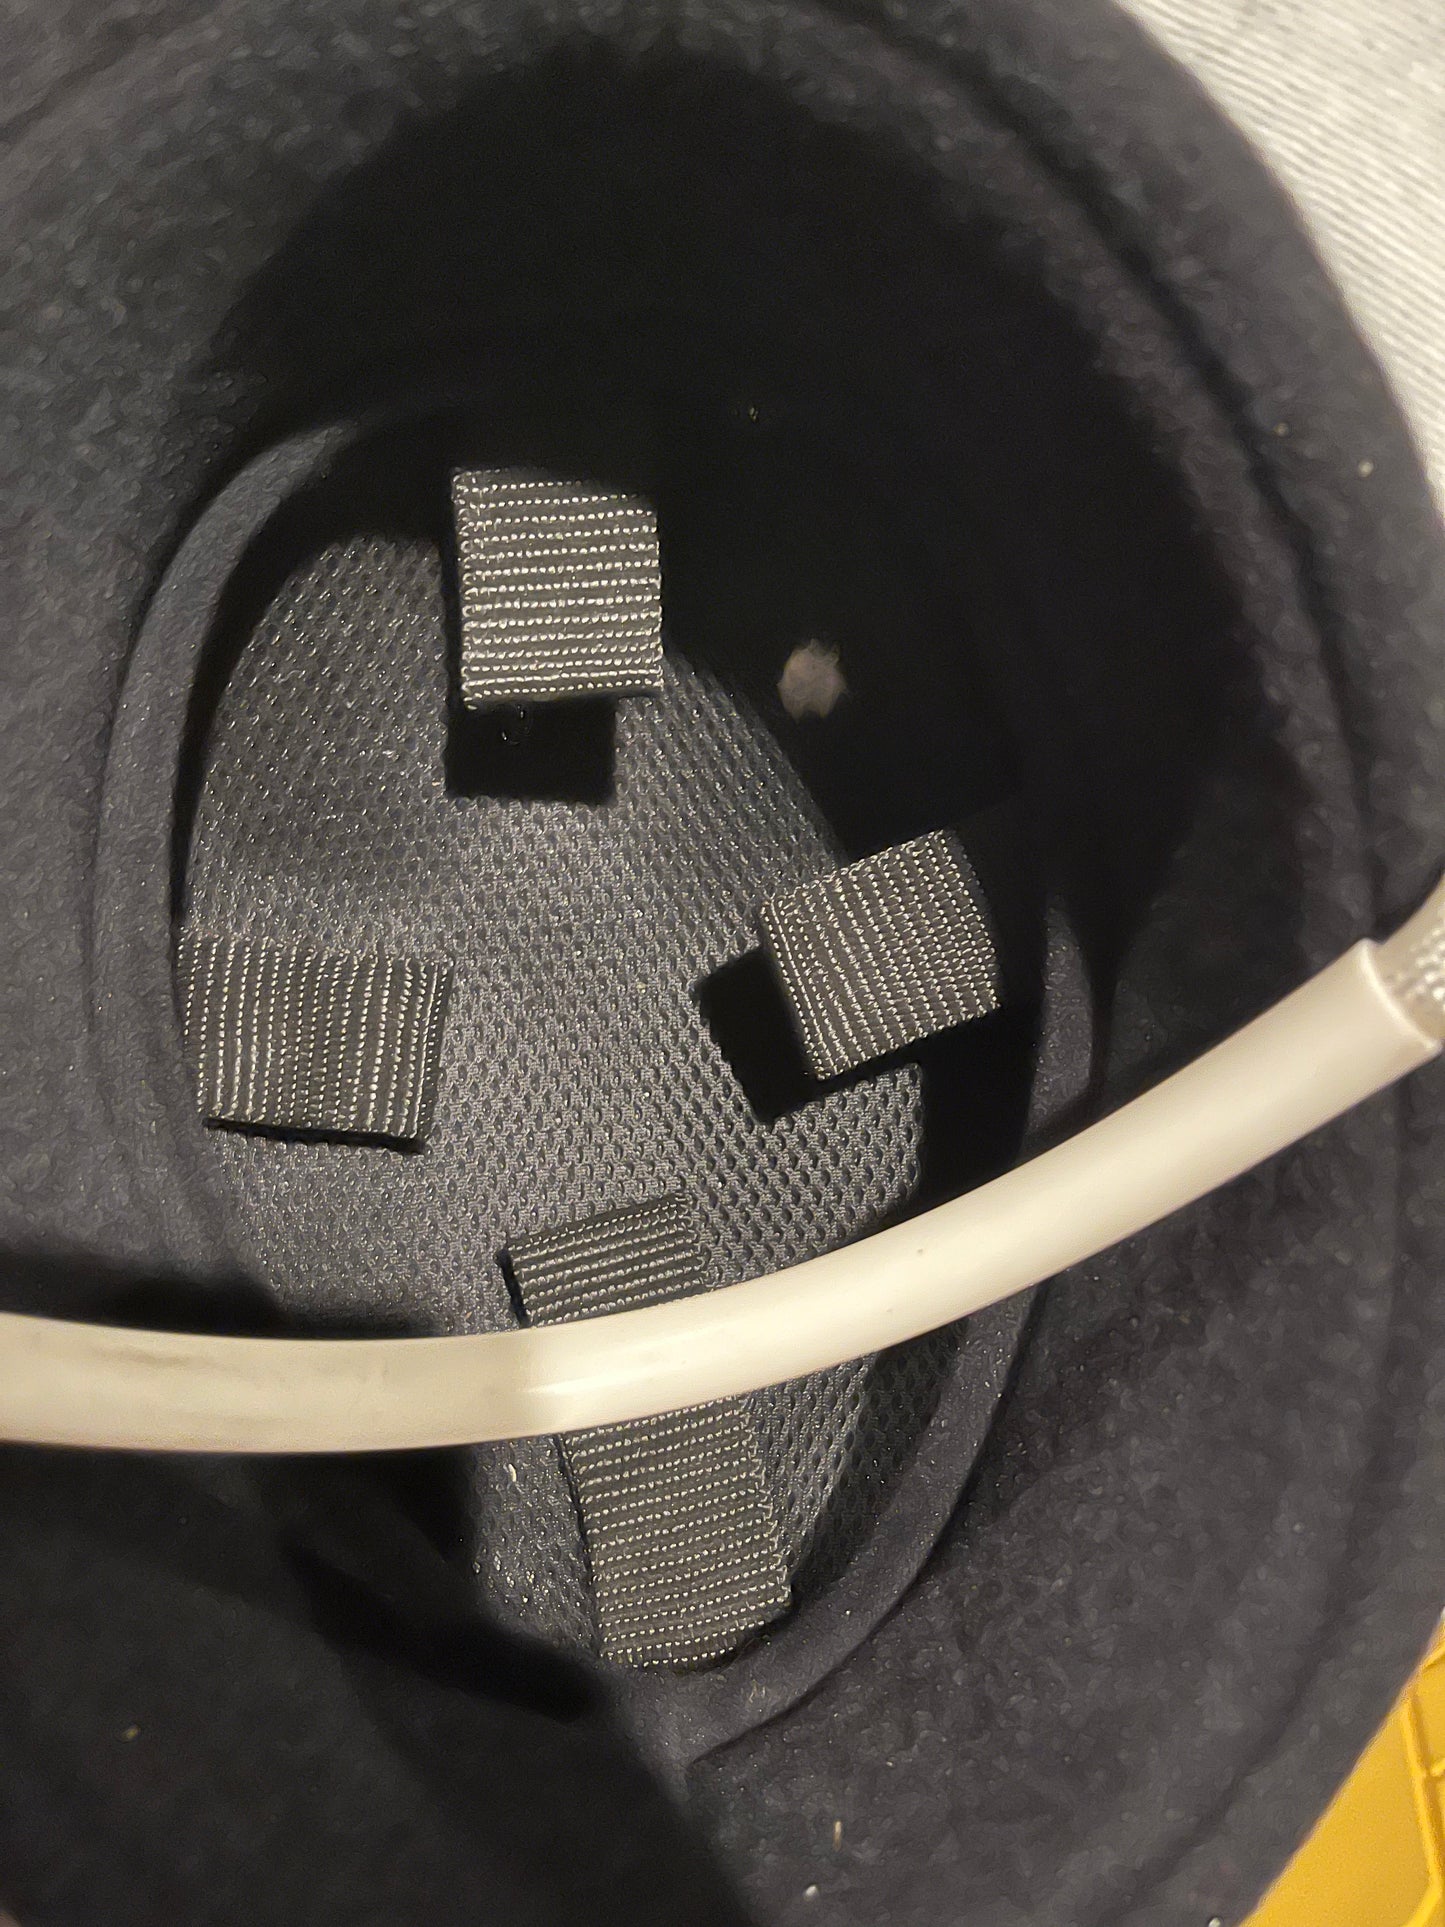 ROYAL PAINS: Hank Lawson's POLO Helmet